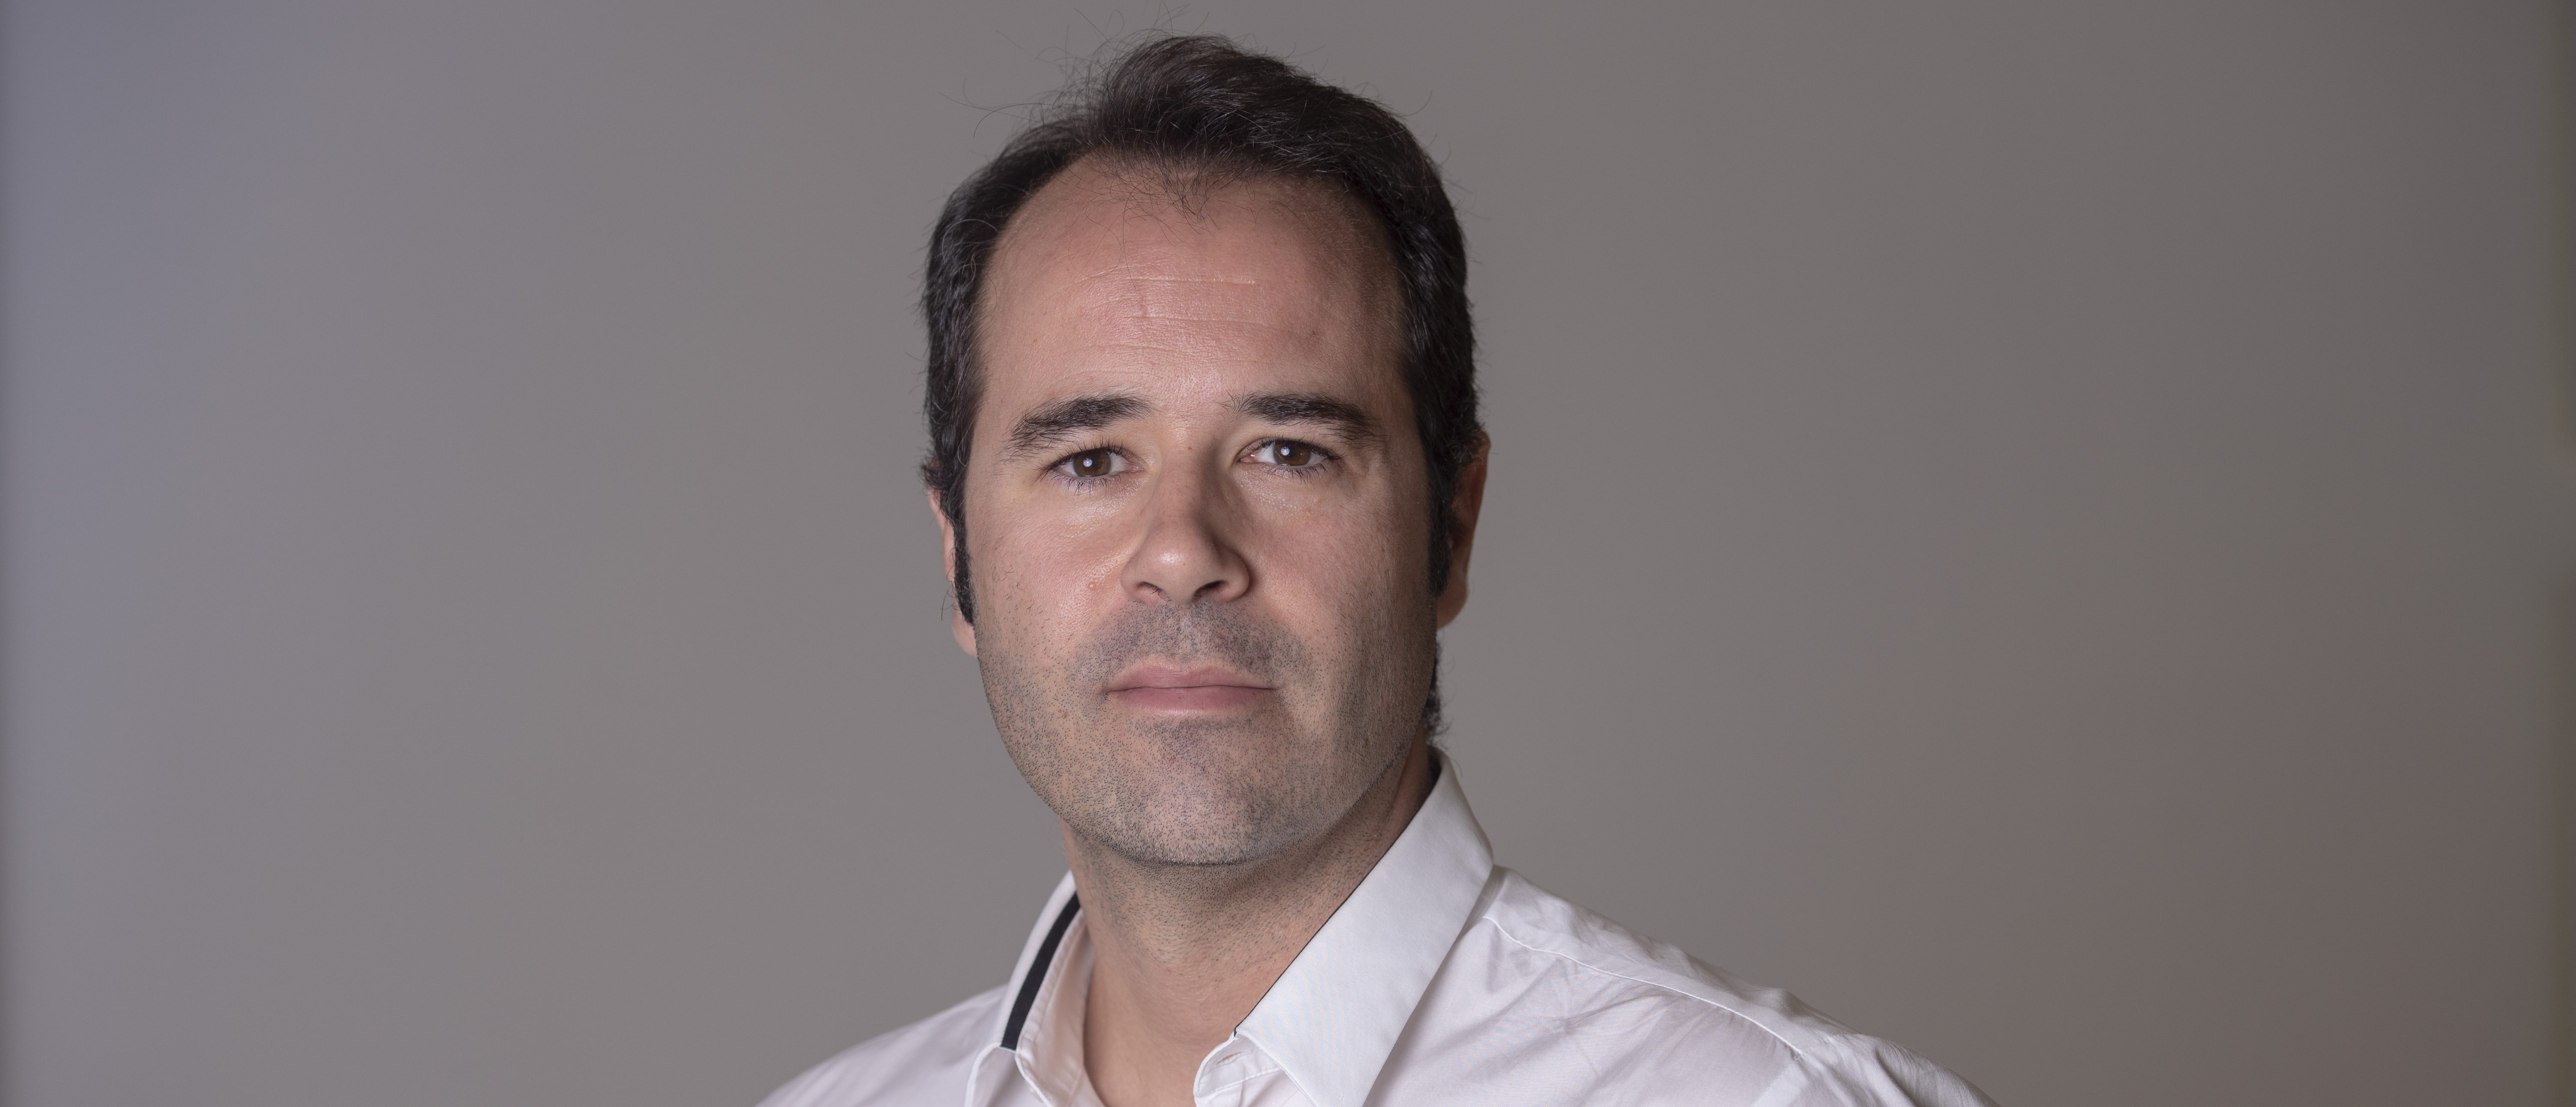 Javier Chicote, Premio APM al Mejor Periodista del Año